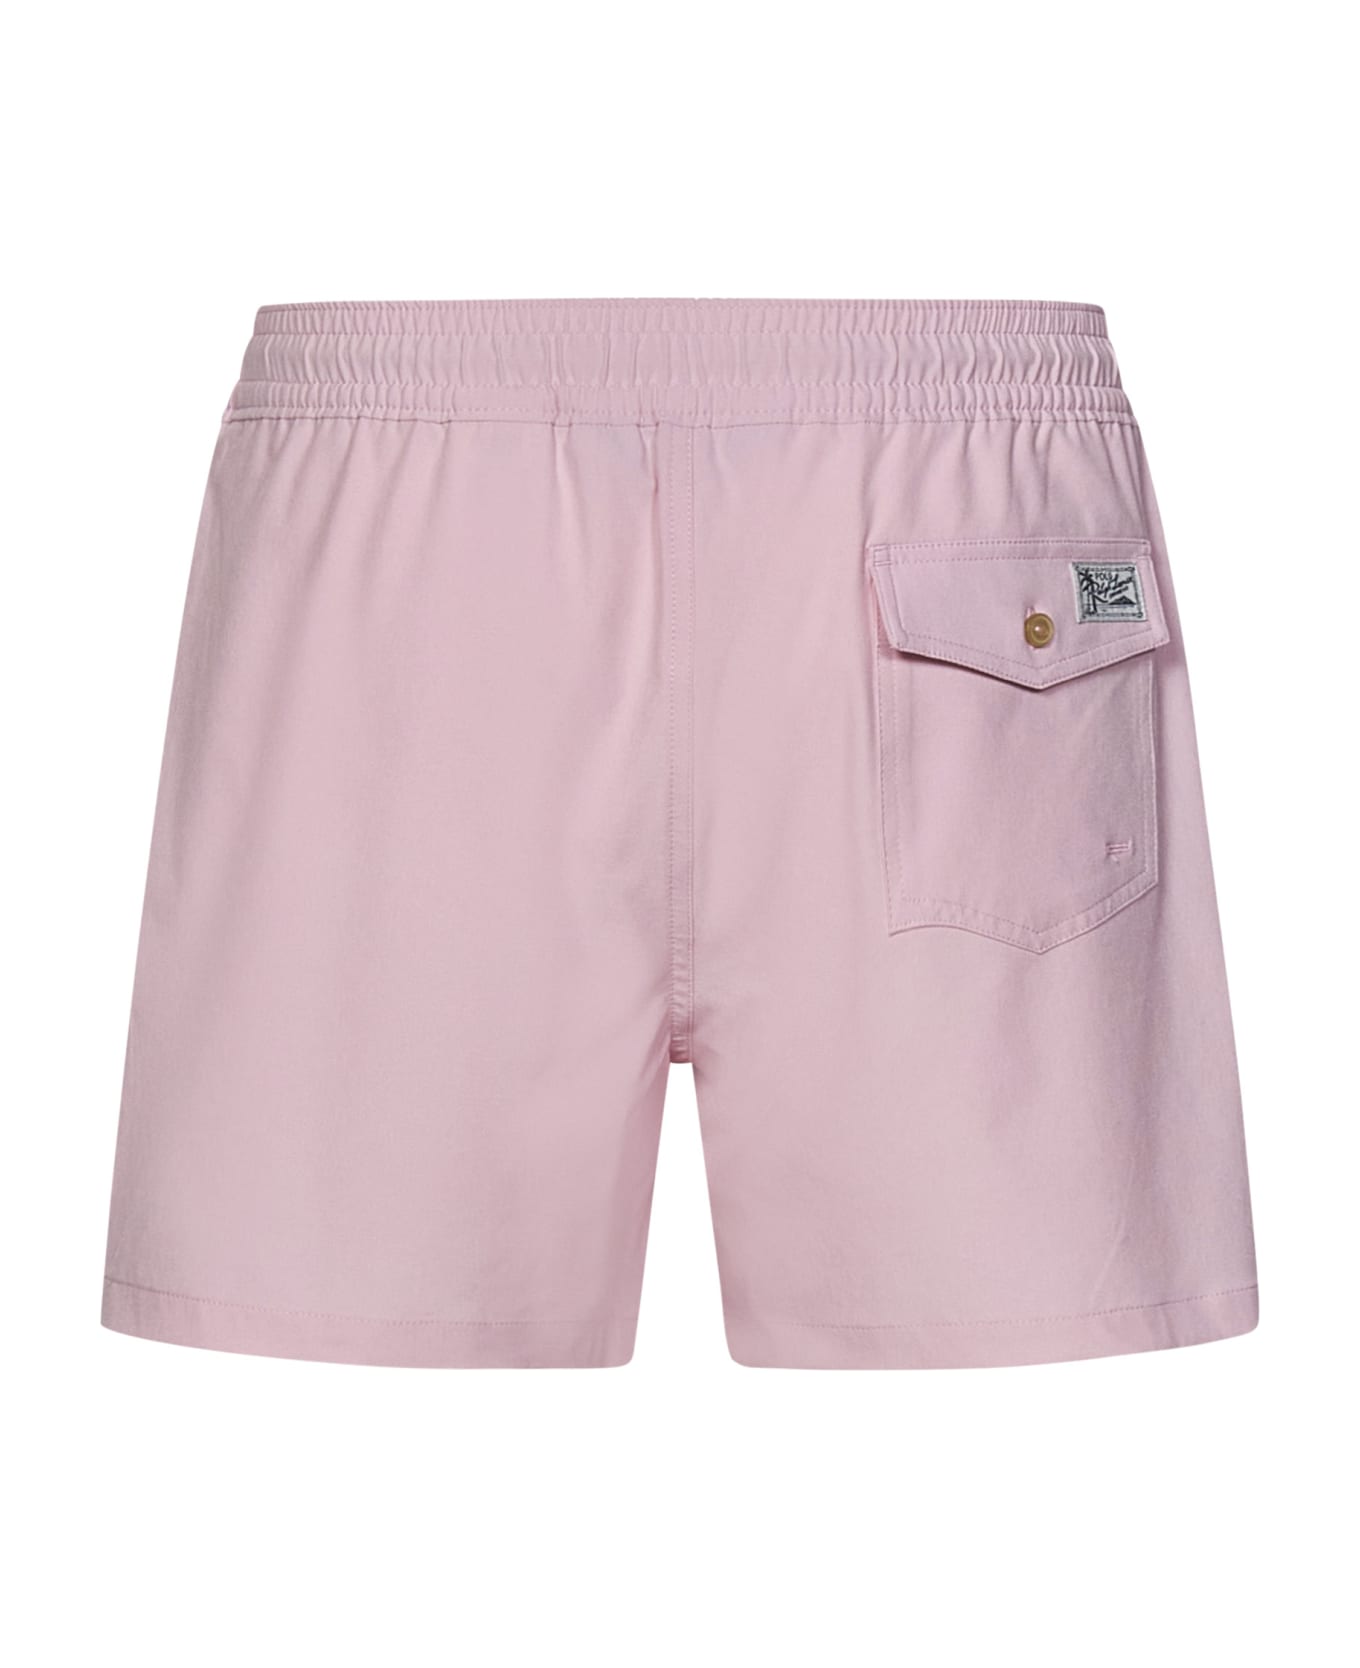 Polo Ralph Lauren Traveler Swimsuit - Pink